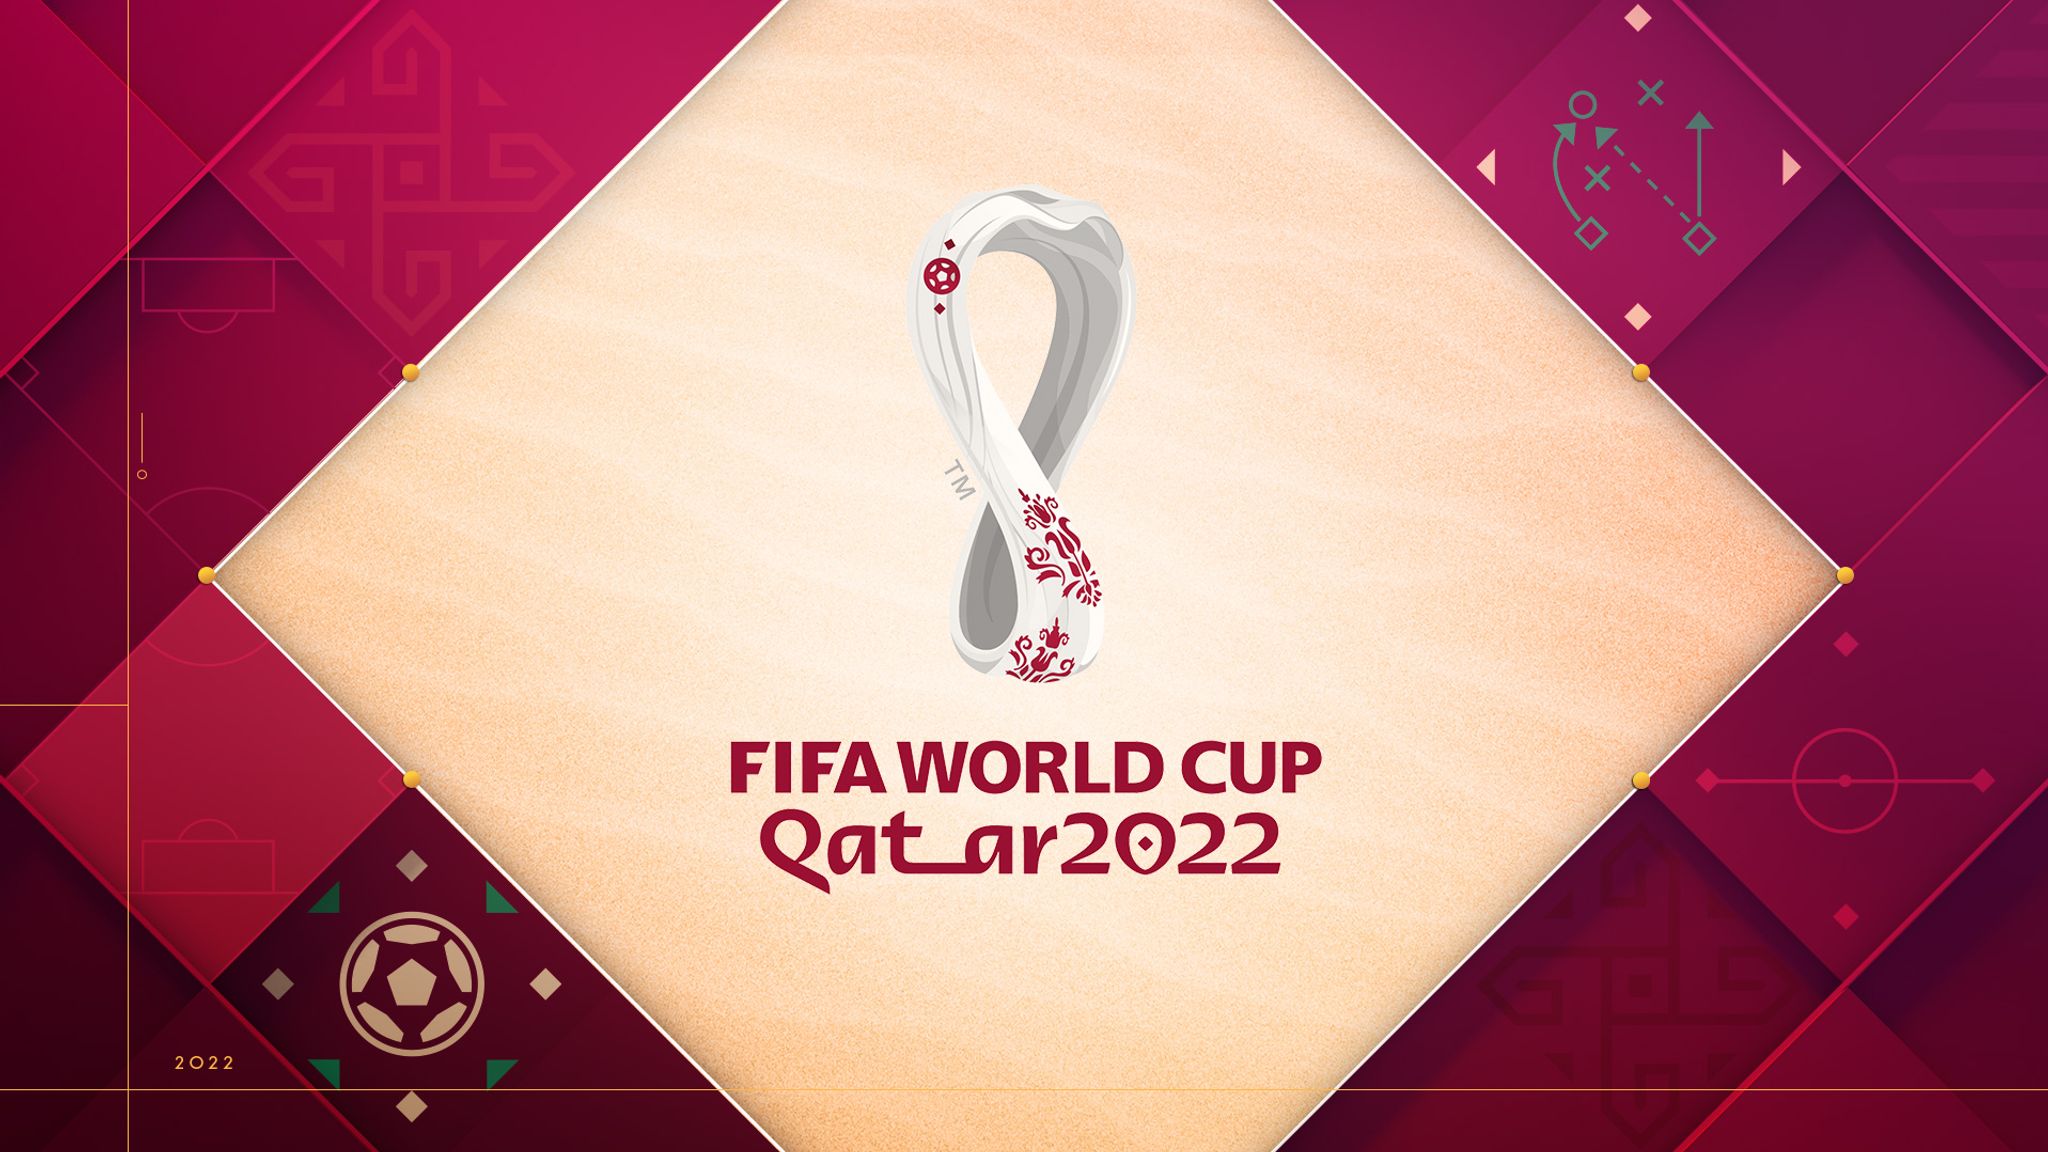 FIFA 23 NO XBOX ONE, GAME PASS - Inicio de game play da Copa do Mundo 2022.  Brasil X Servia 